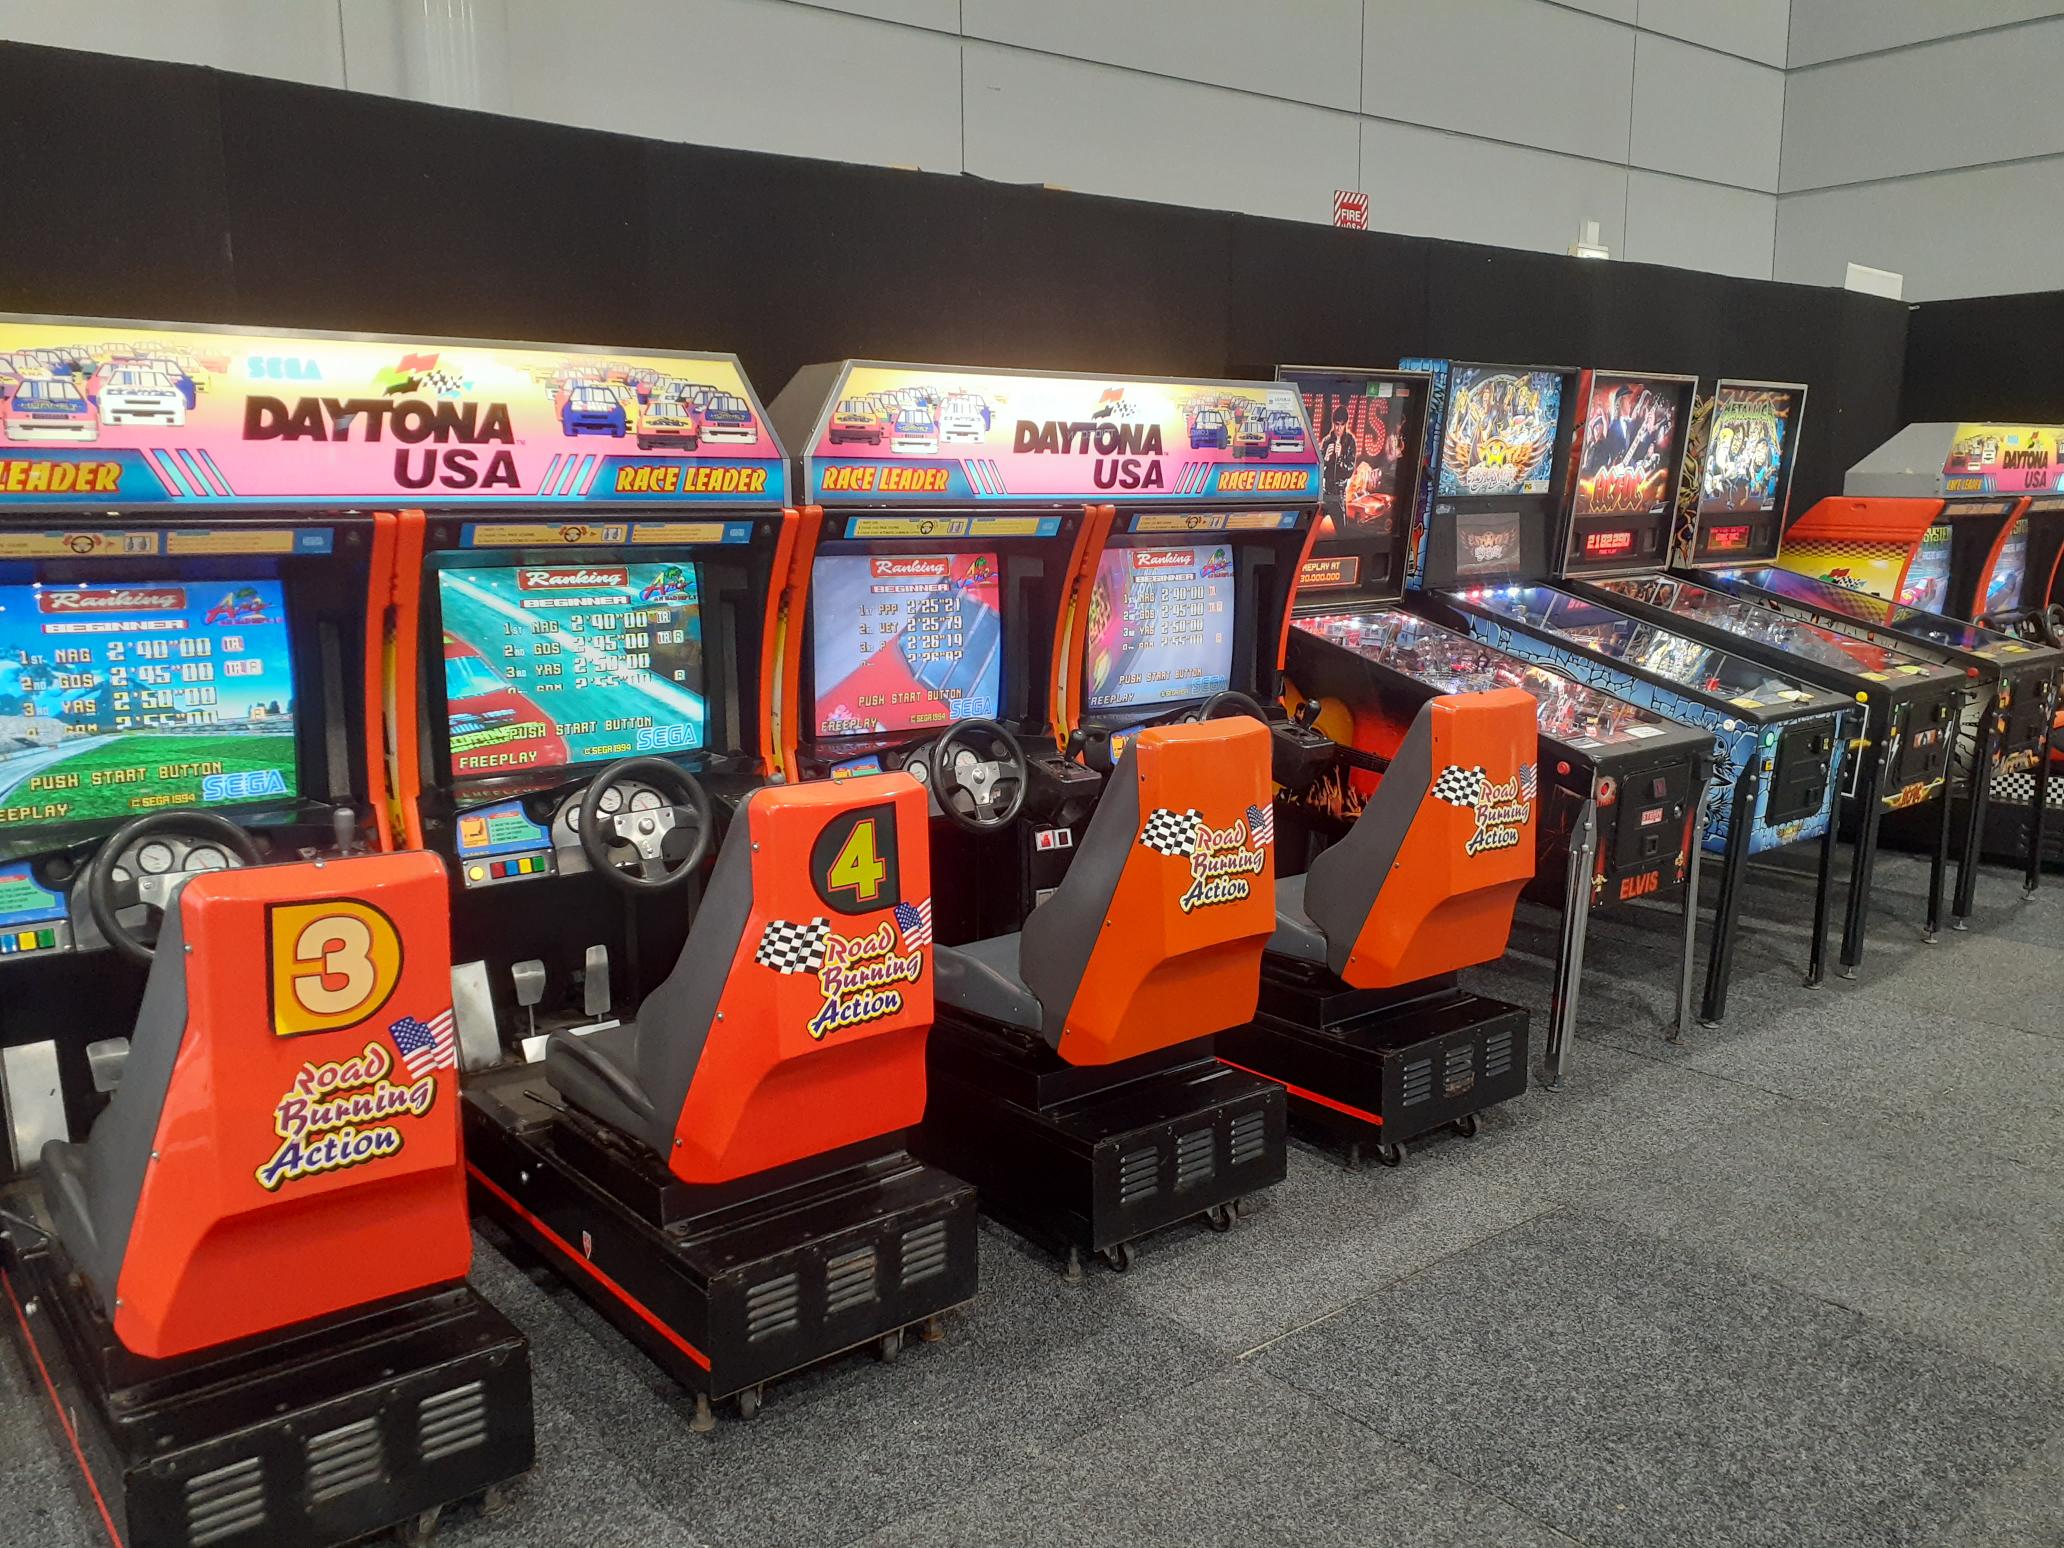 Daytona Racing, 2 Player Linked Arcade Game Rental